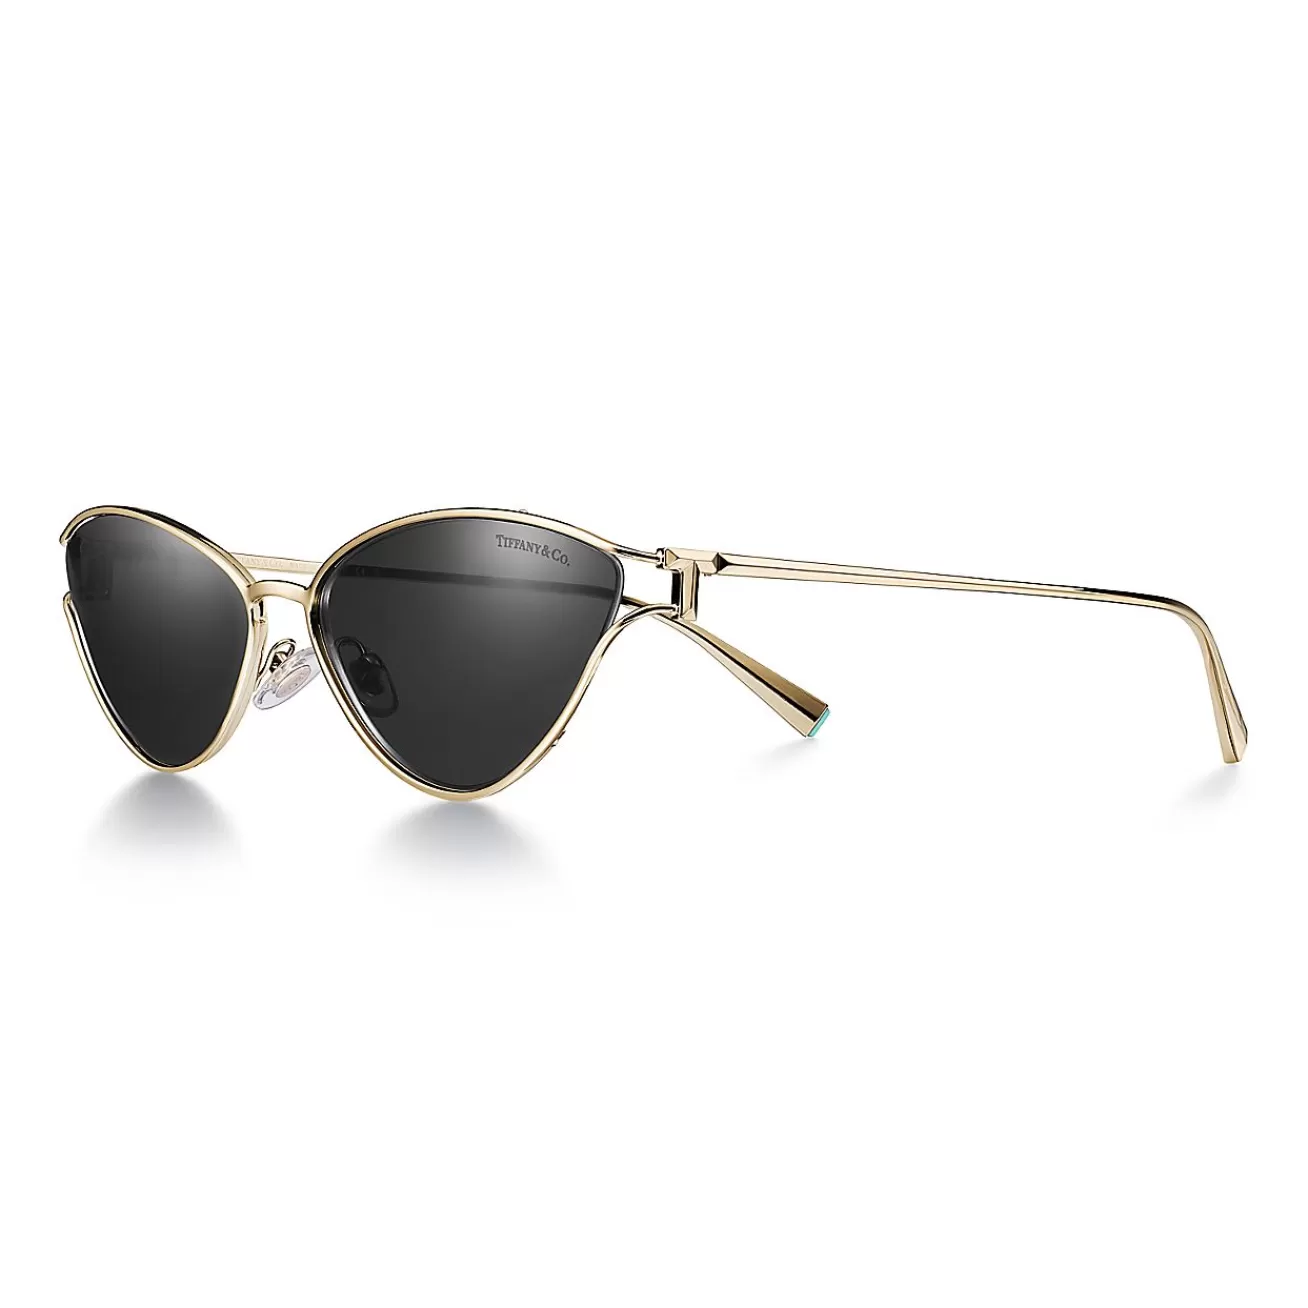 Tiffany & Co. Tiffany T Sunglasses in Pale Gold-colored Metal with Dark Gray Lenses | ^Women Tiffany T | Sunglasses